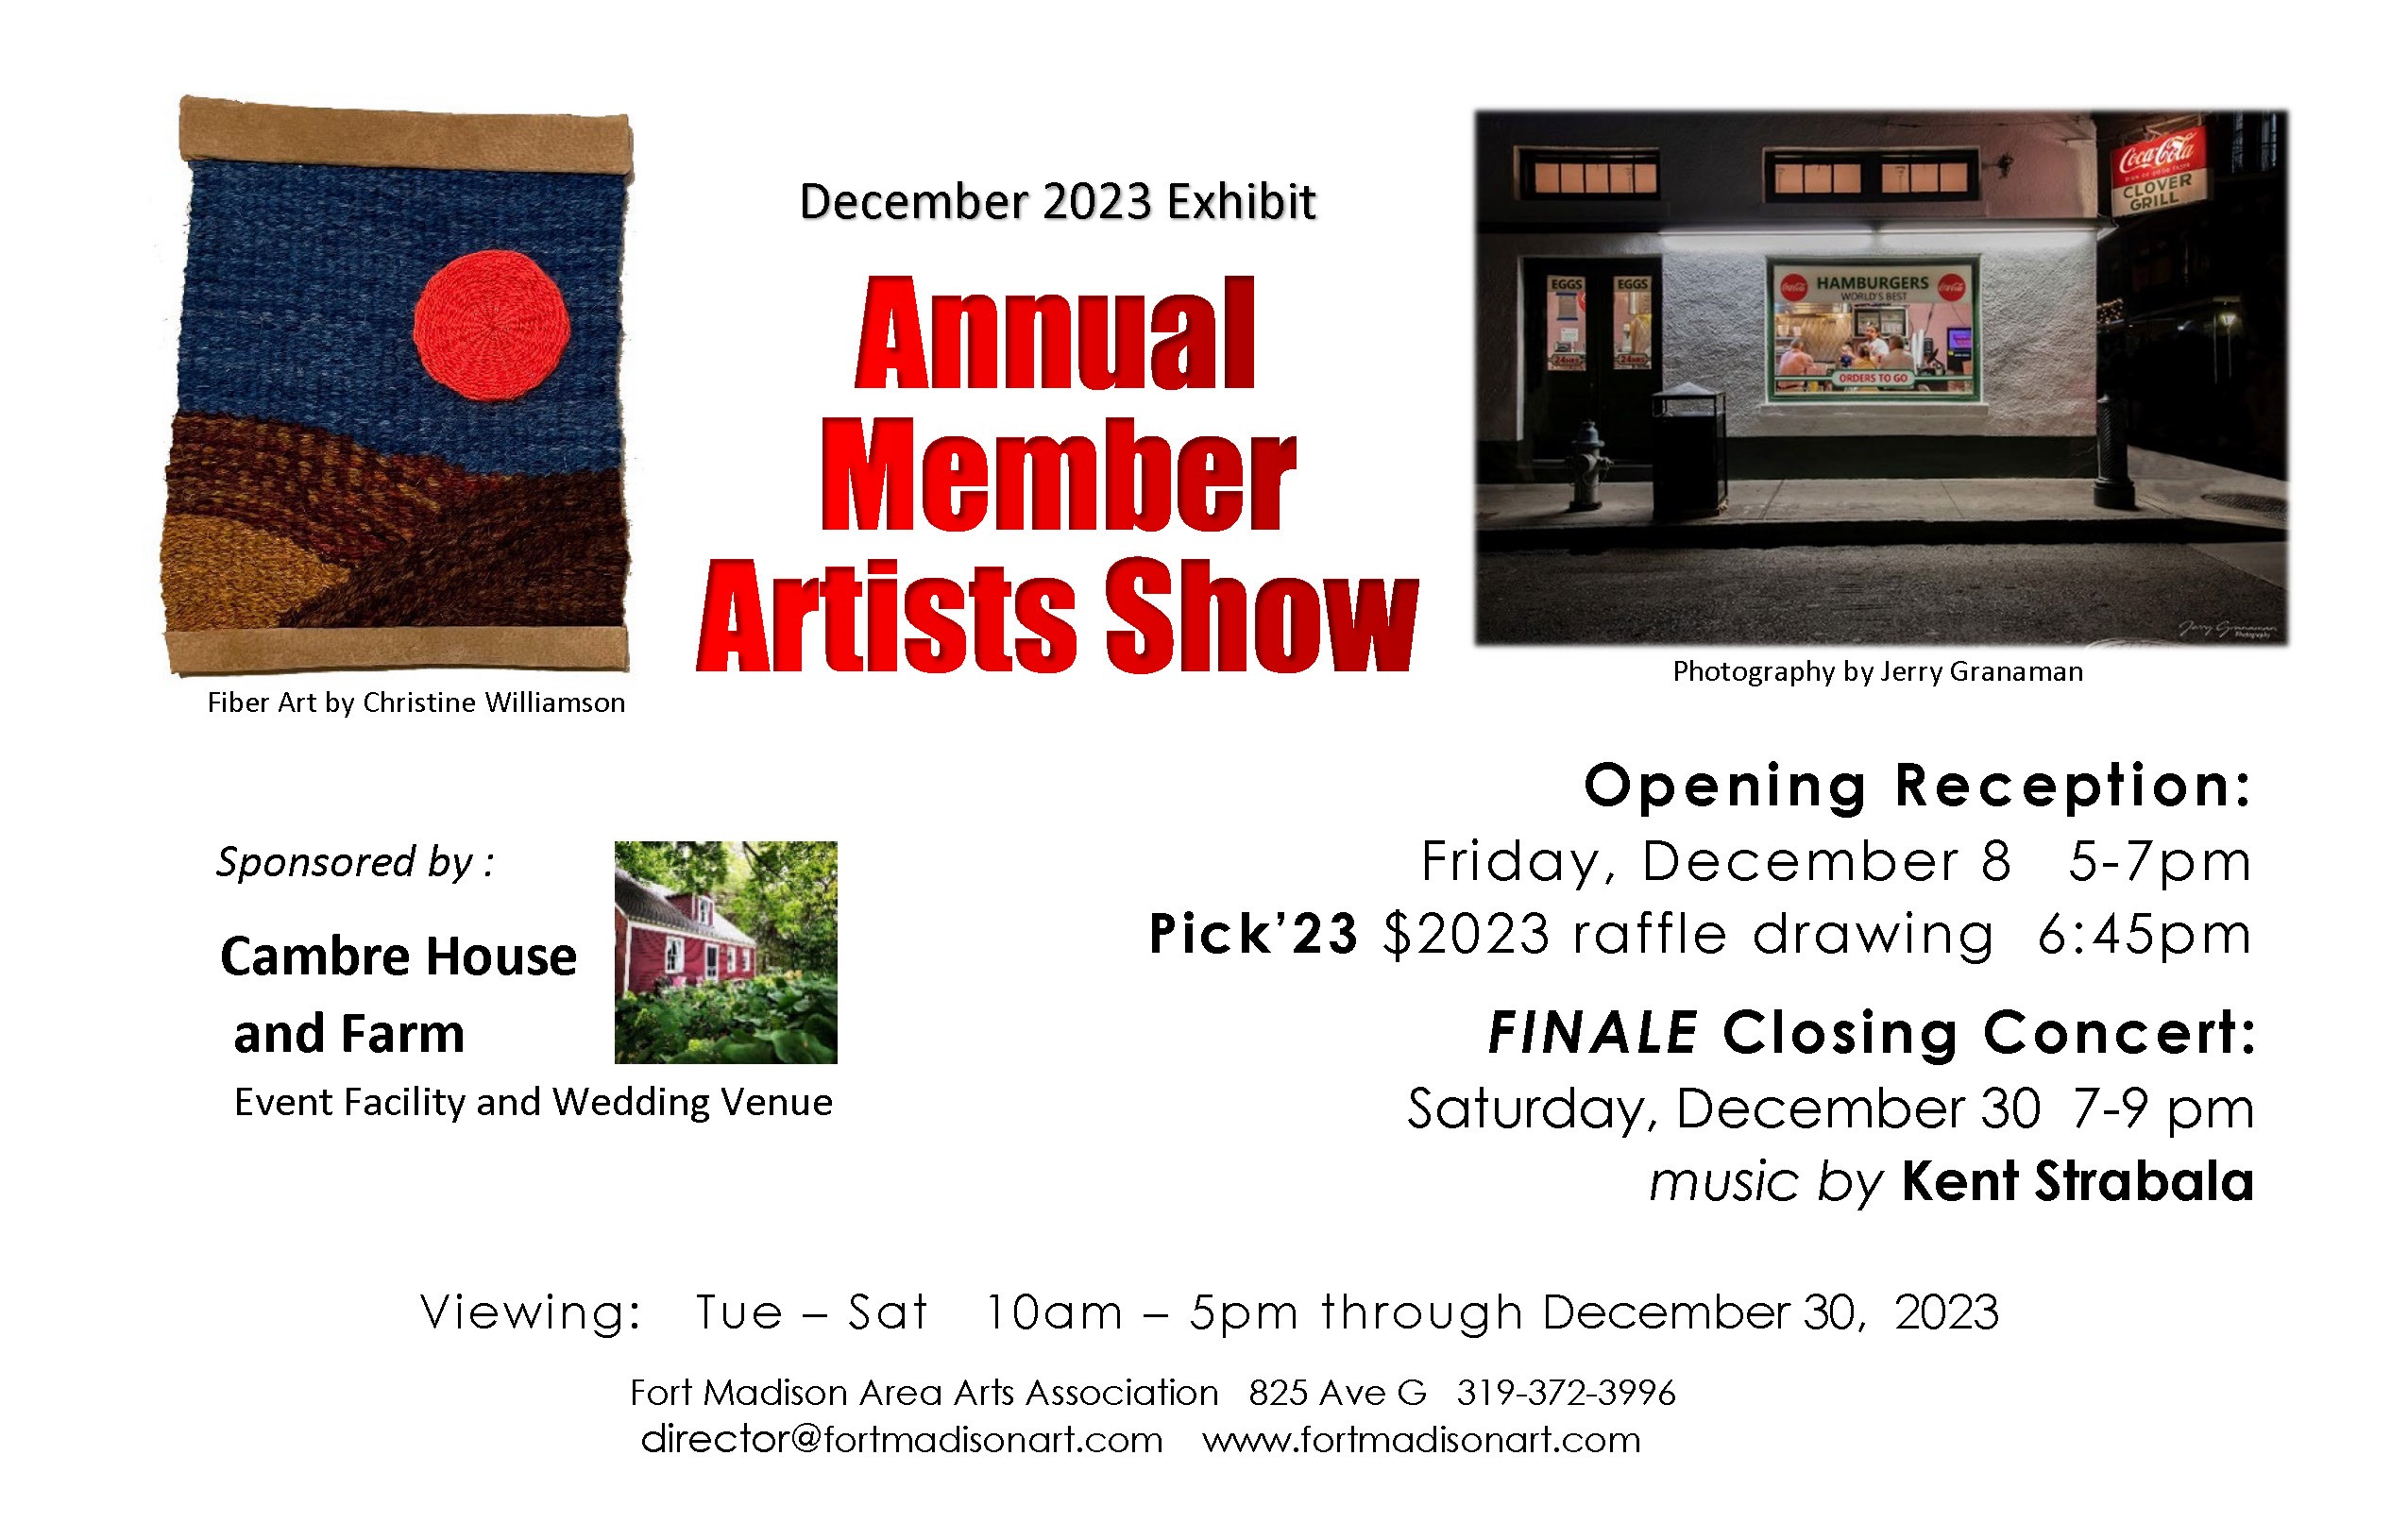 Annual Member Show at FMAAA Art Center